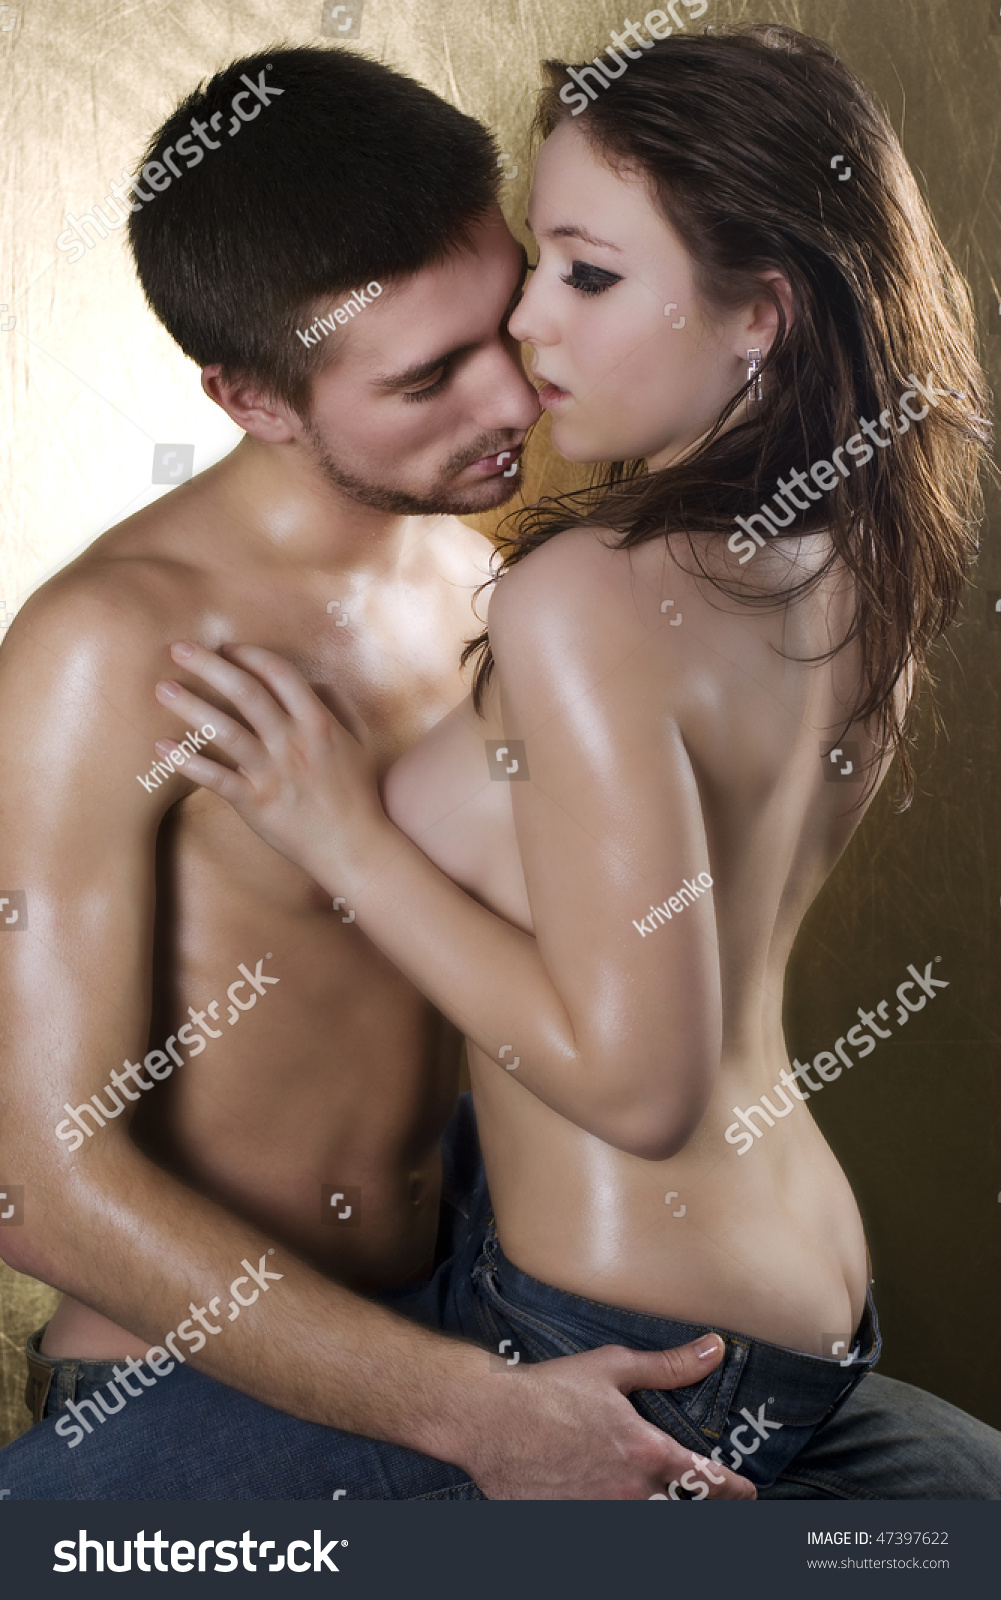 Men Topless Teens Kissing 90